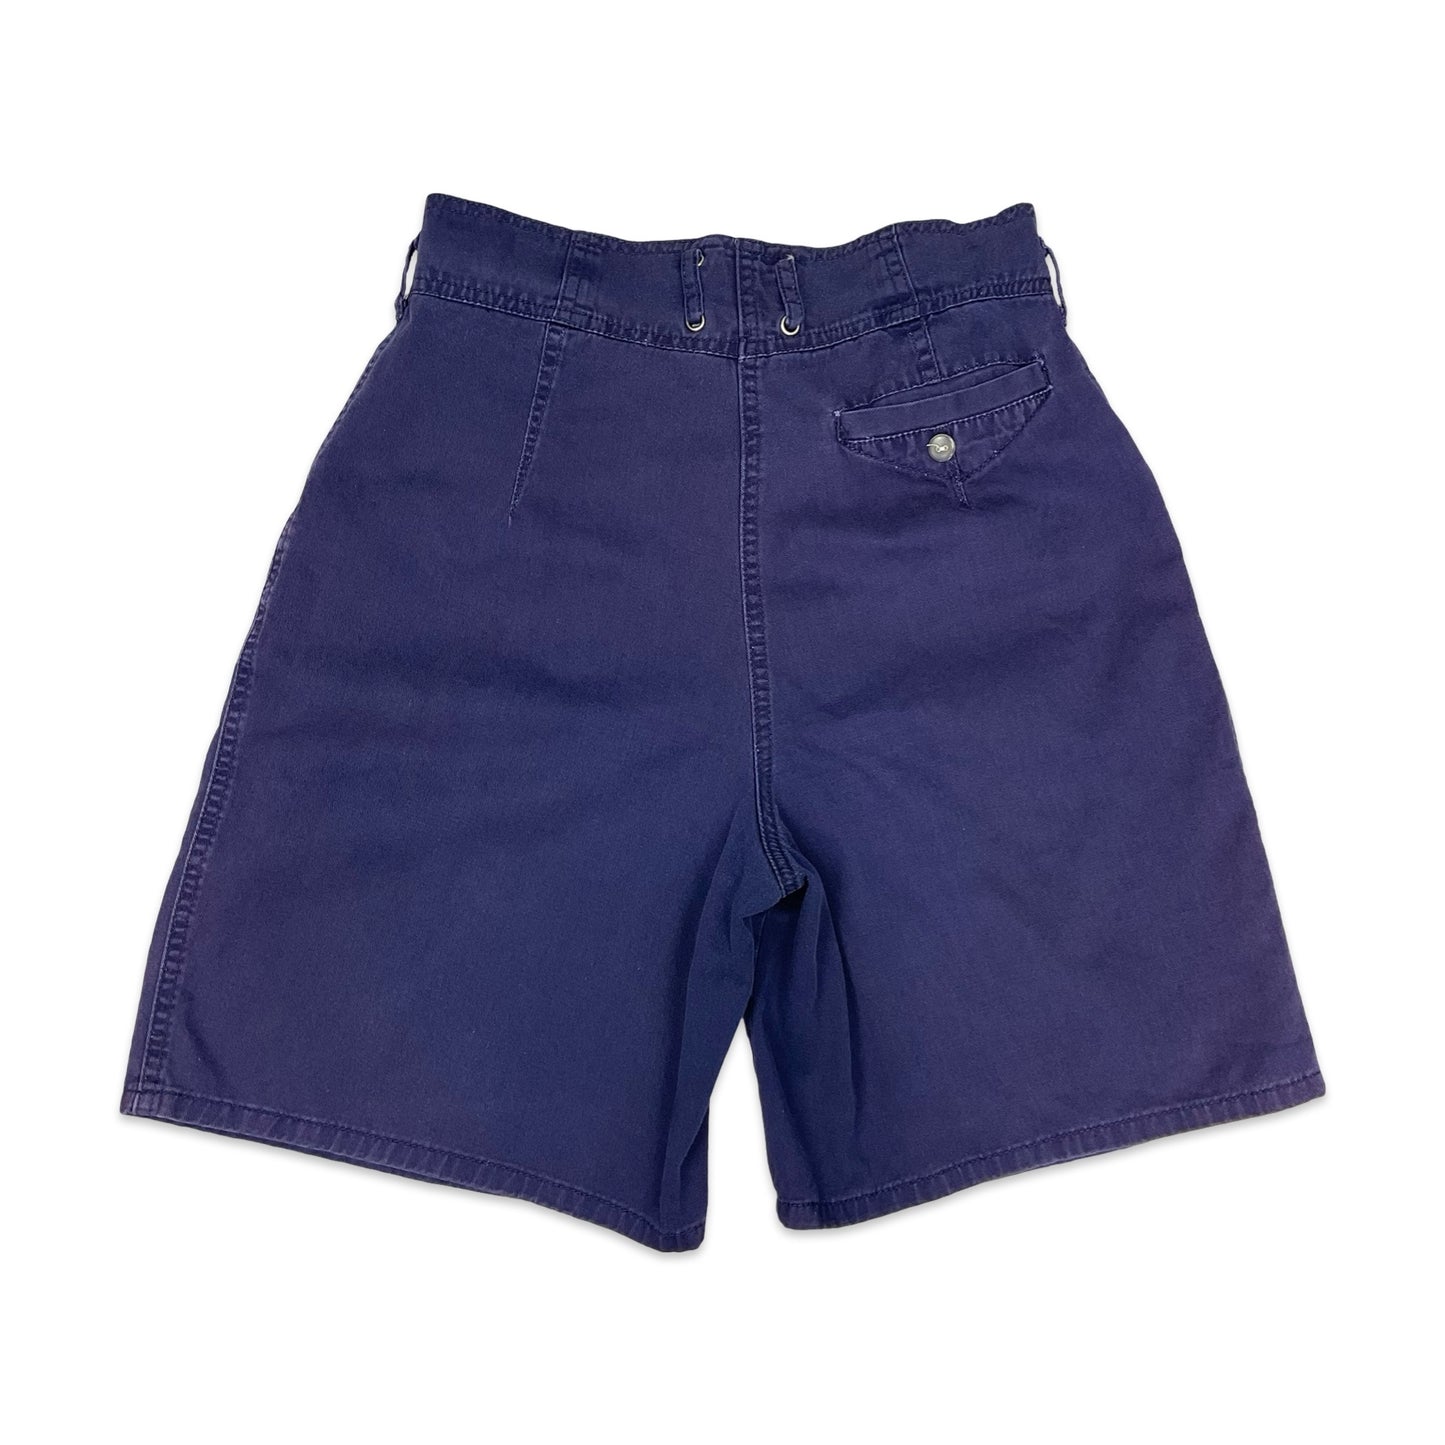 Vintage Purple Denim Shorts 10